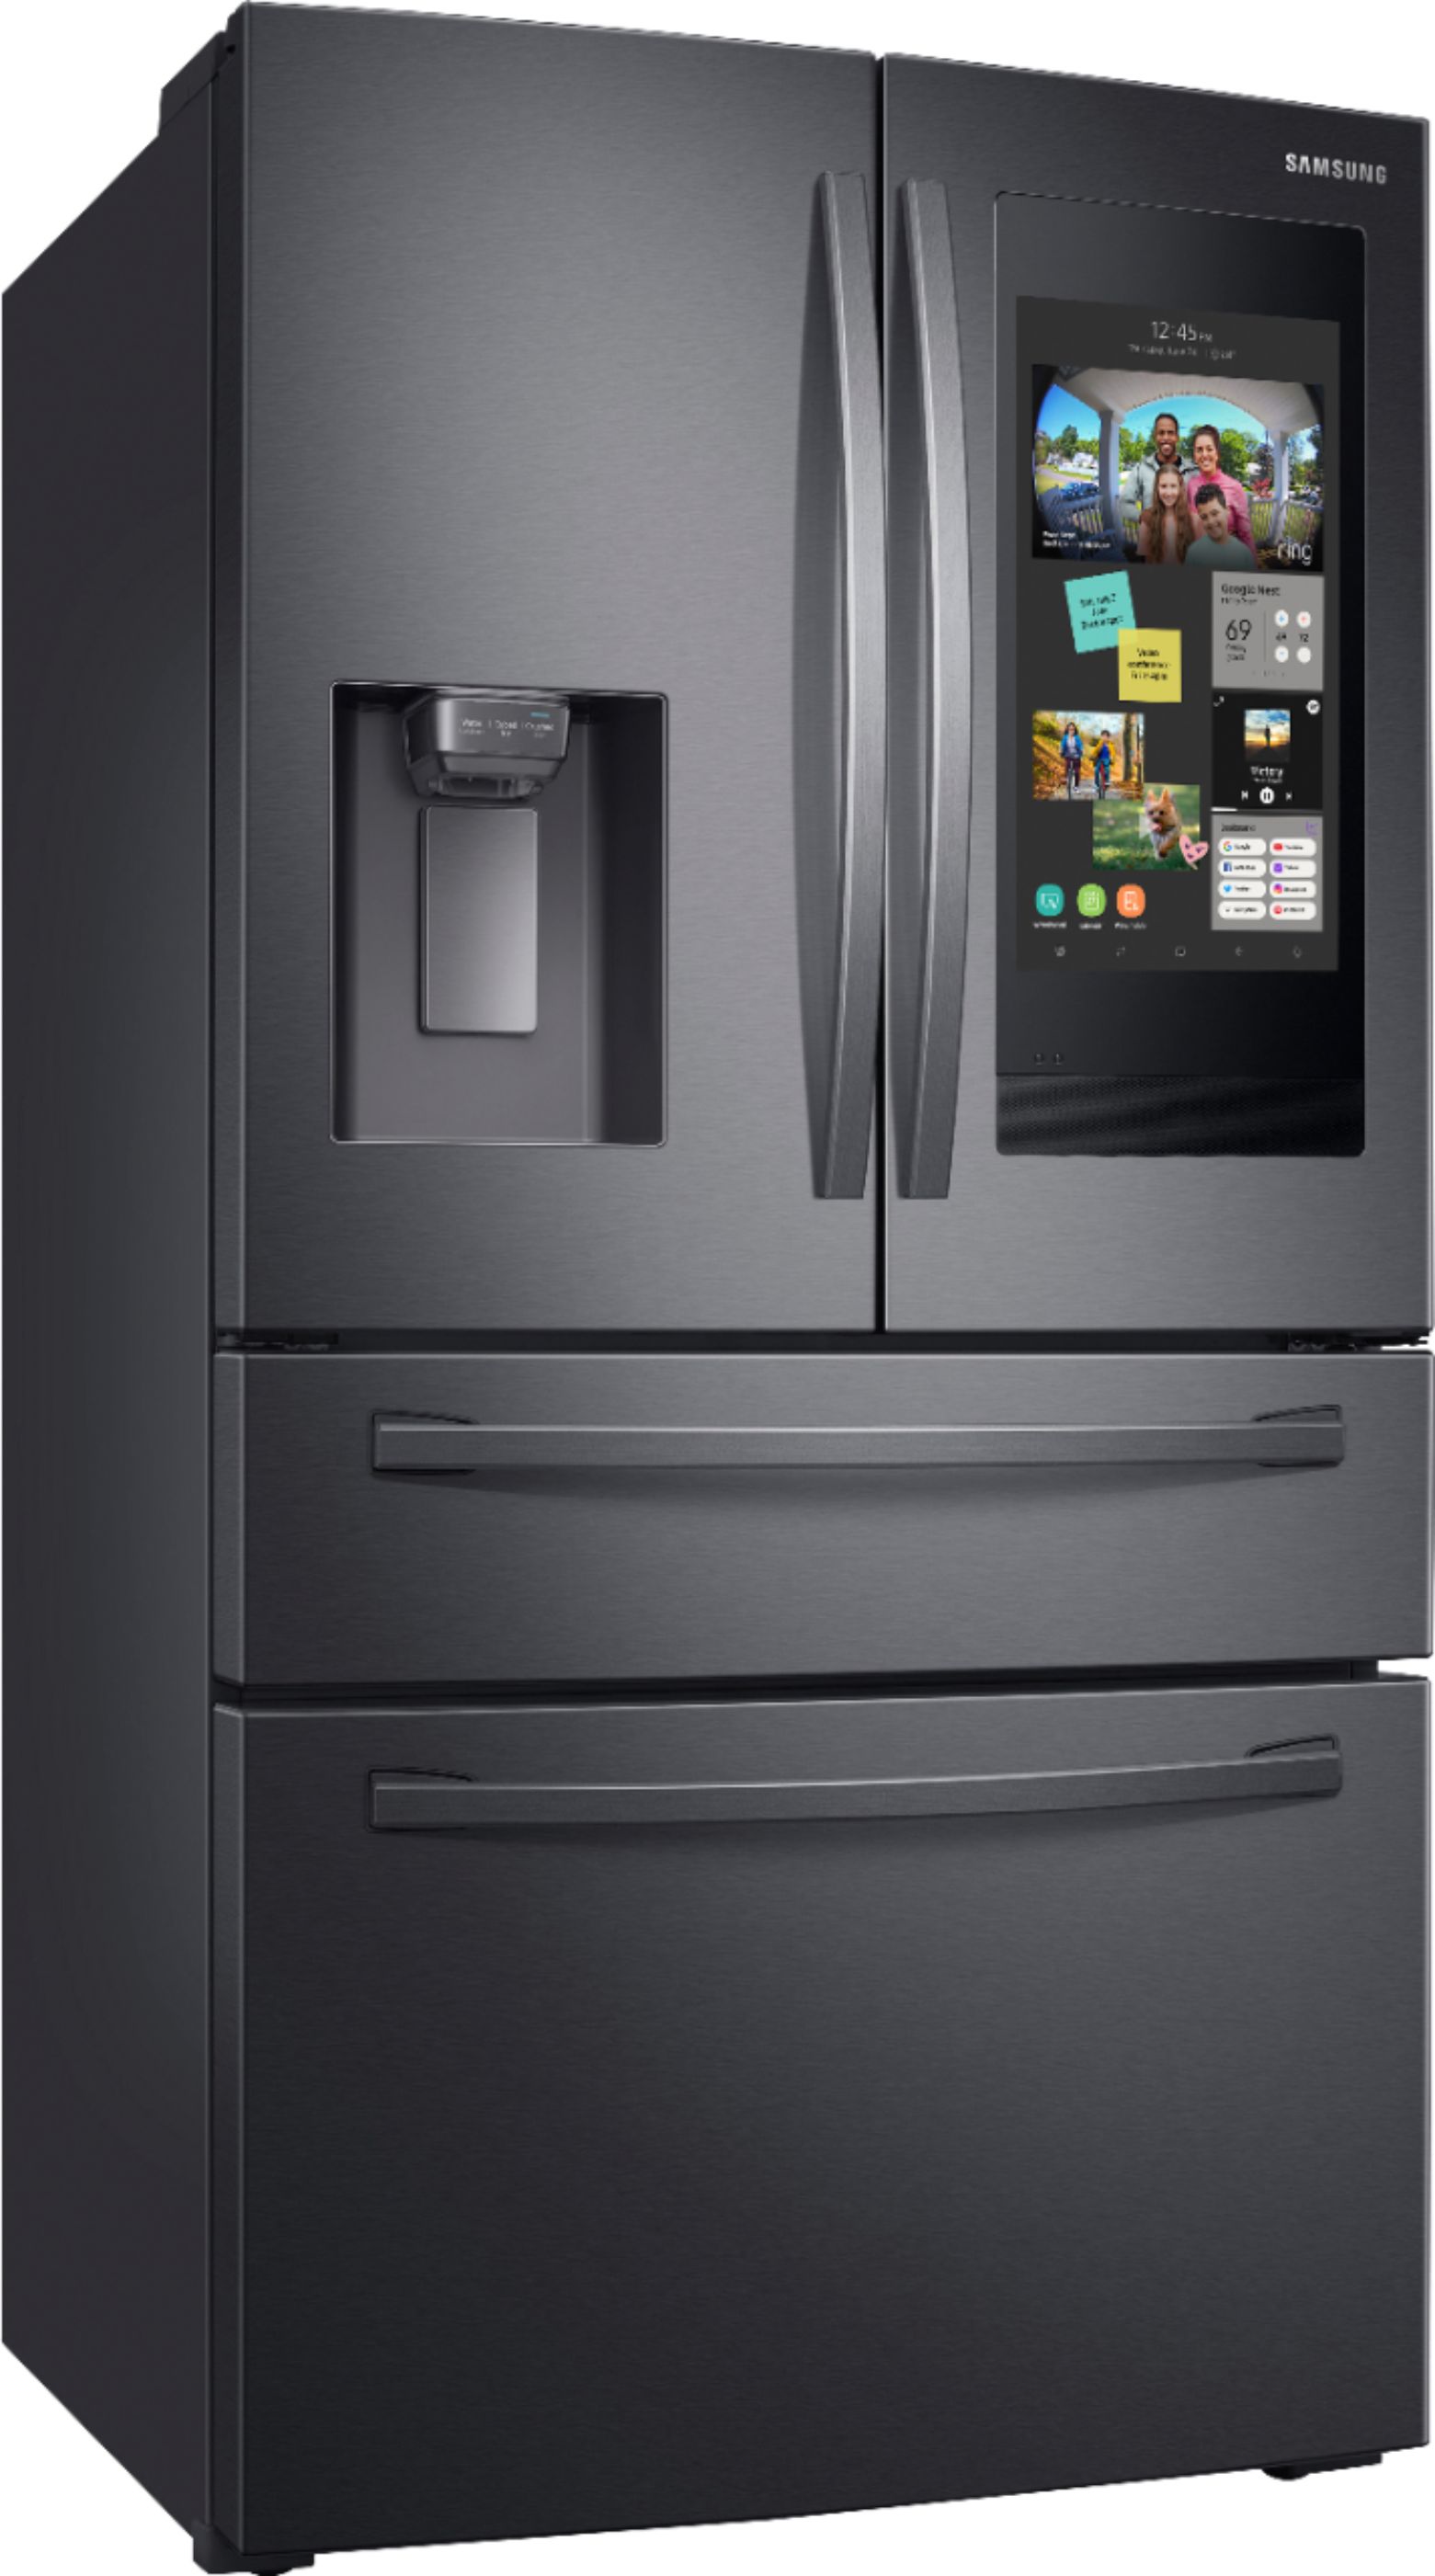 Angle View: Samsung - Family Hub 22.2 Cu. Ft. 4-Door French Door Counter-Depth Fingerprint Resistant Refrigerator - Black stainless steel